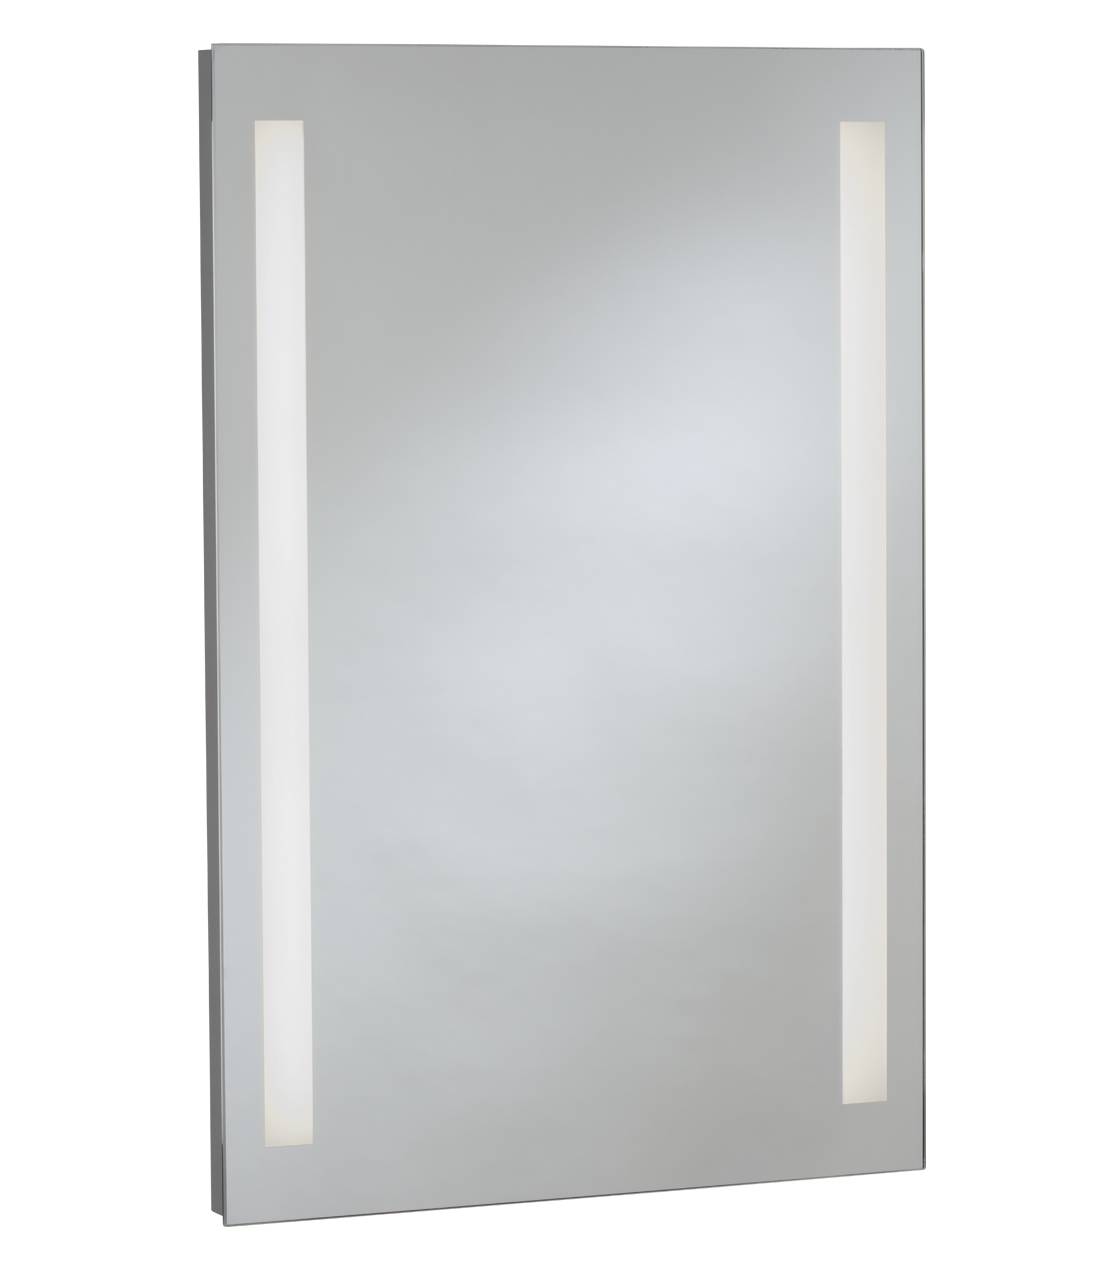 LED Sidelit Mirror B-1691